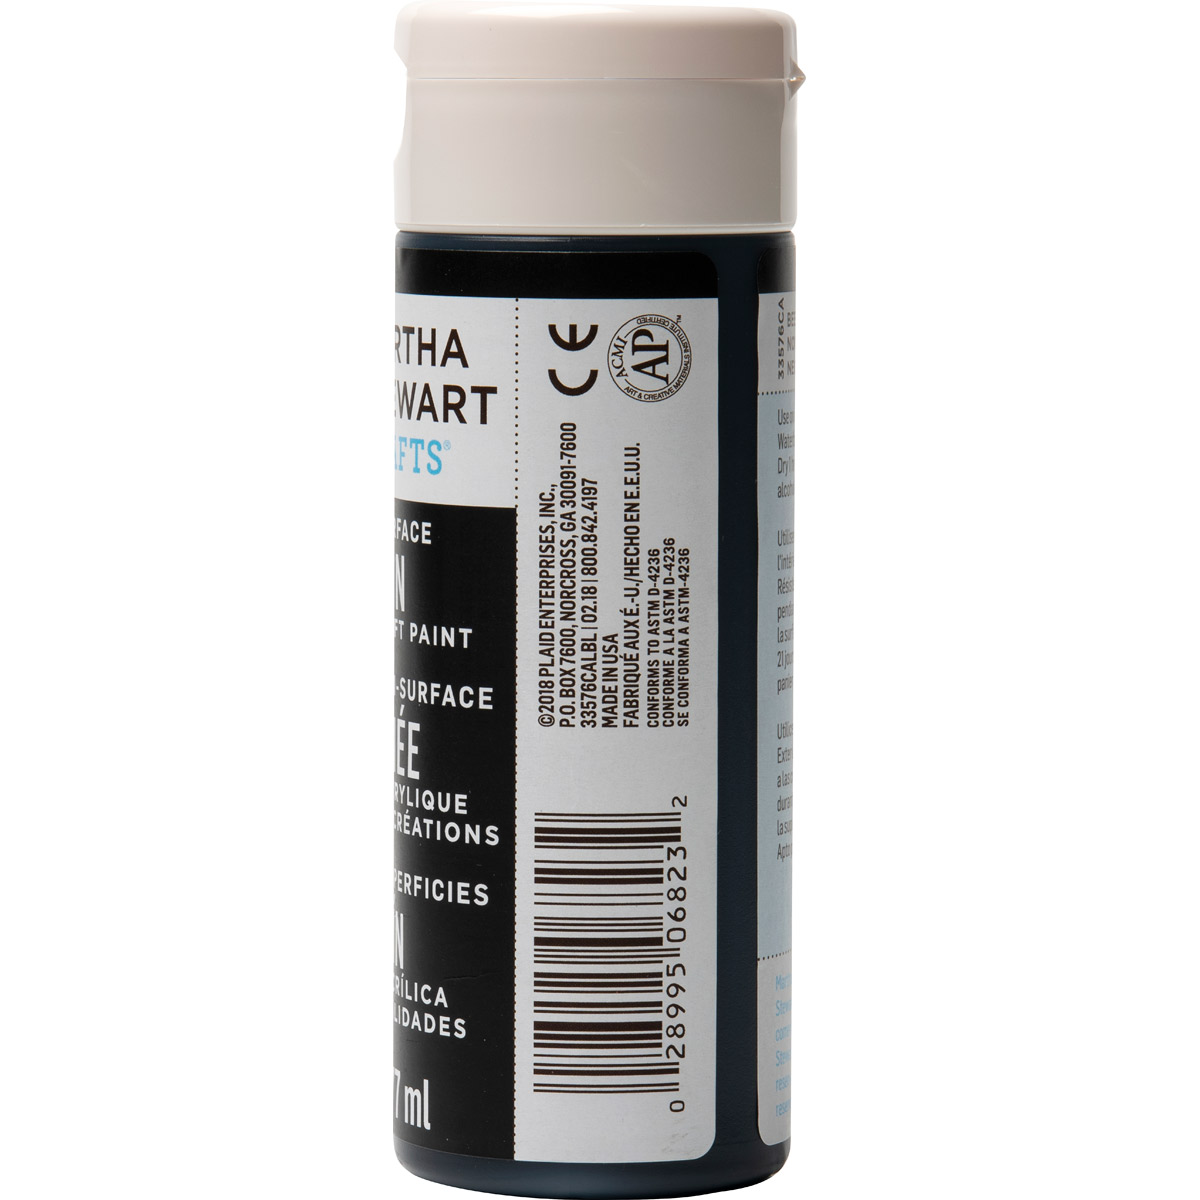 Martha Stewart ® Multi-Surface Metallic Acrylic Craft Paint - Beetle Black, 6 oz. - 33576CA